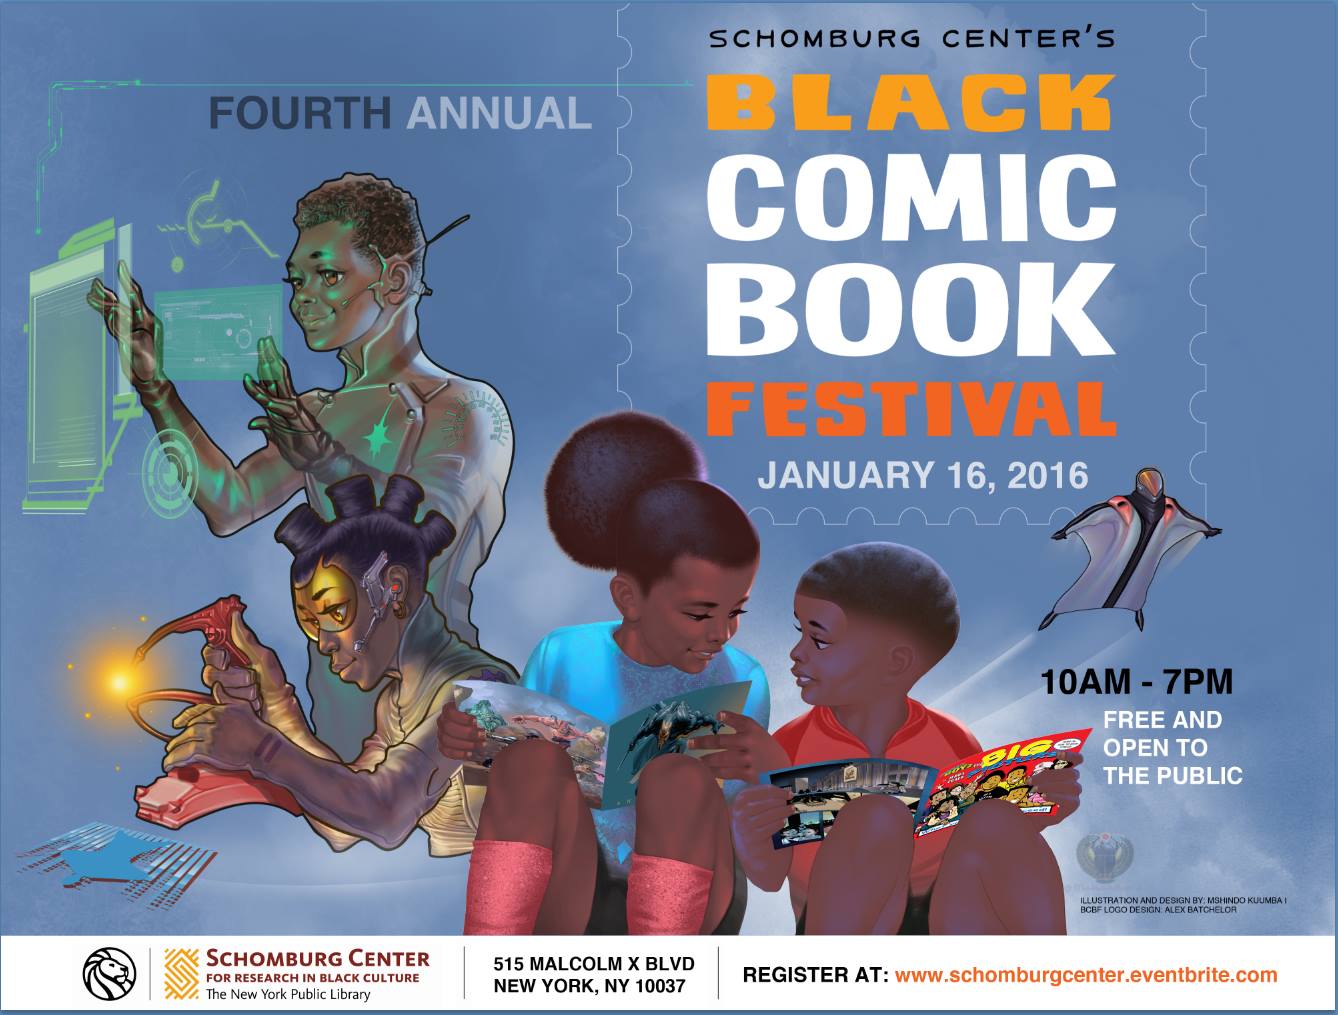 Black Comic Book Festival Jan 16